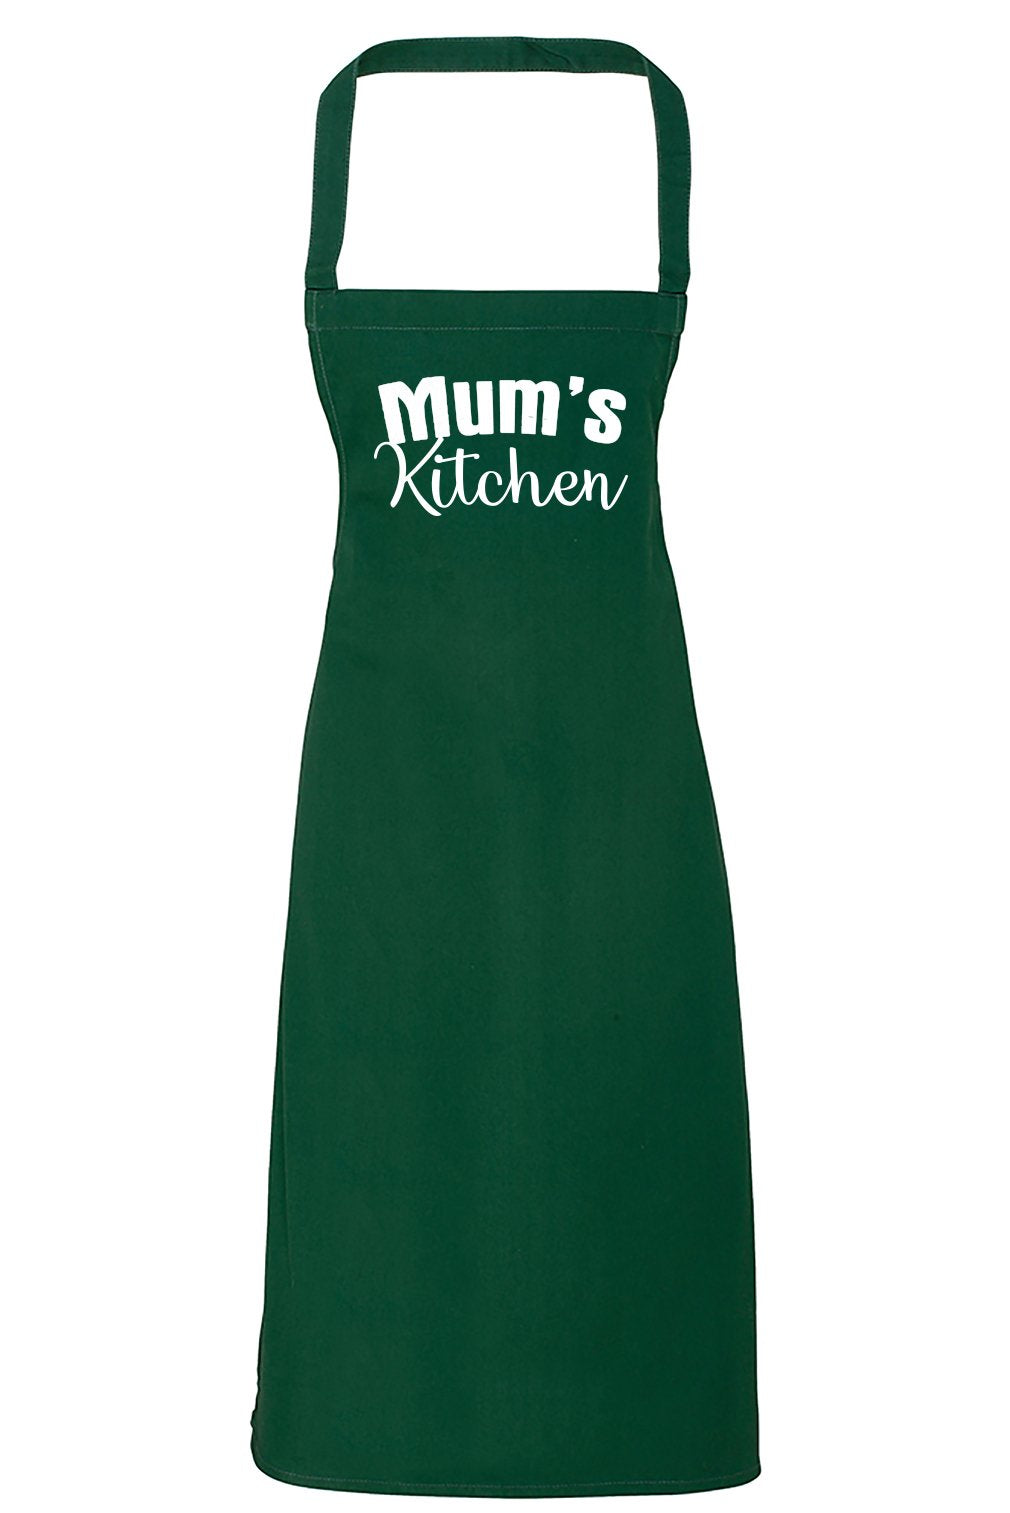 Mum's Kitchen - Adult Apron